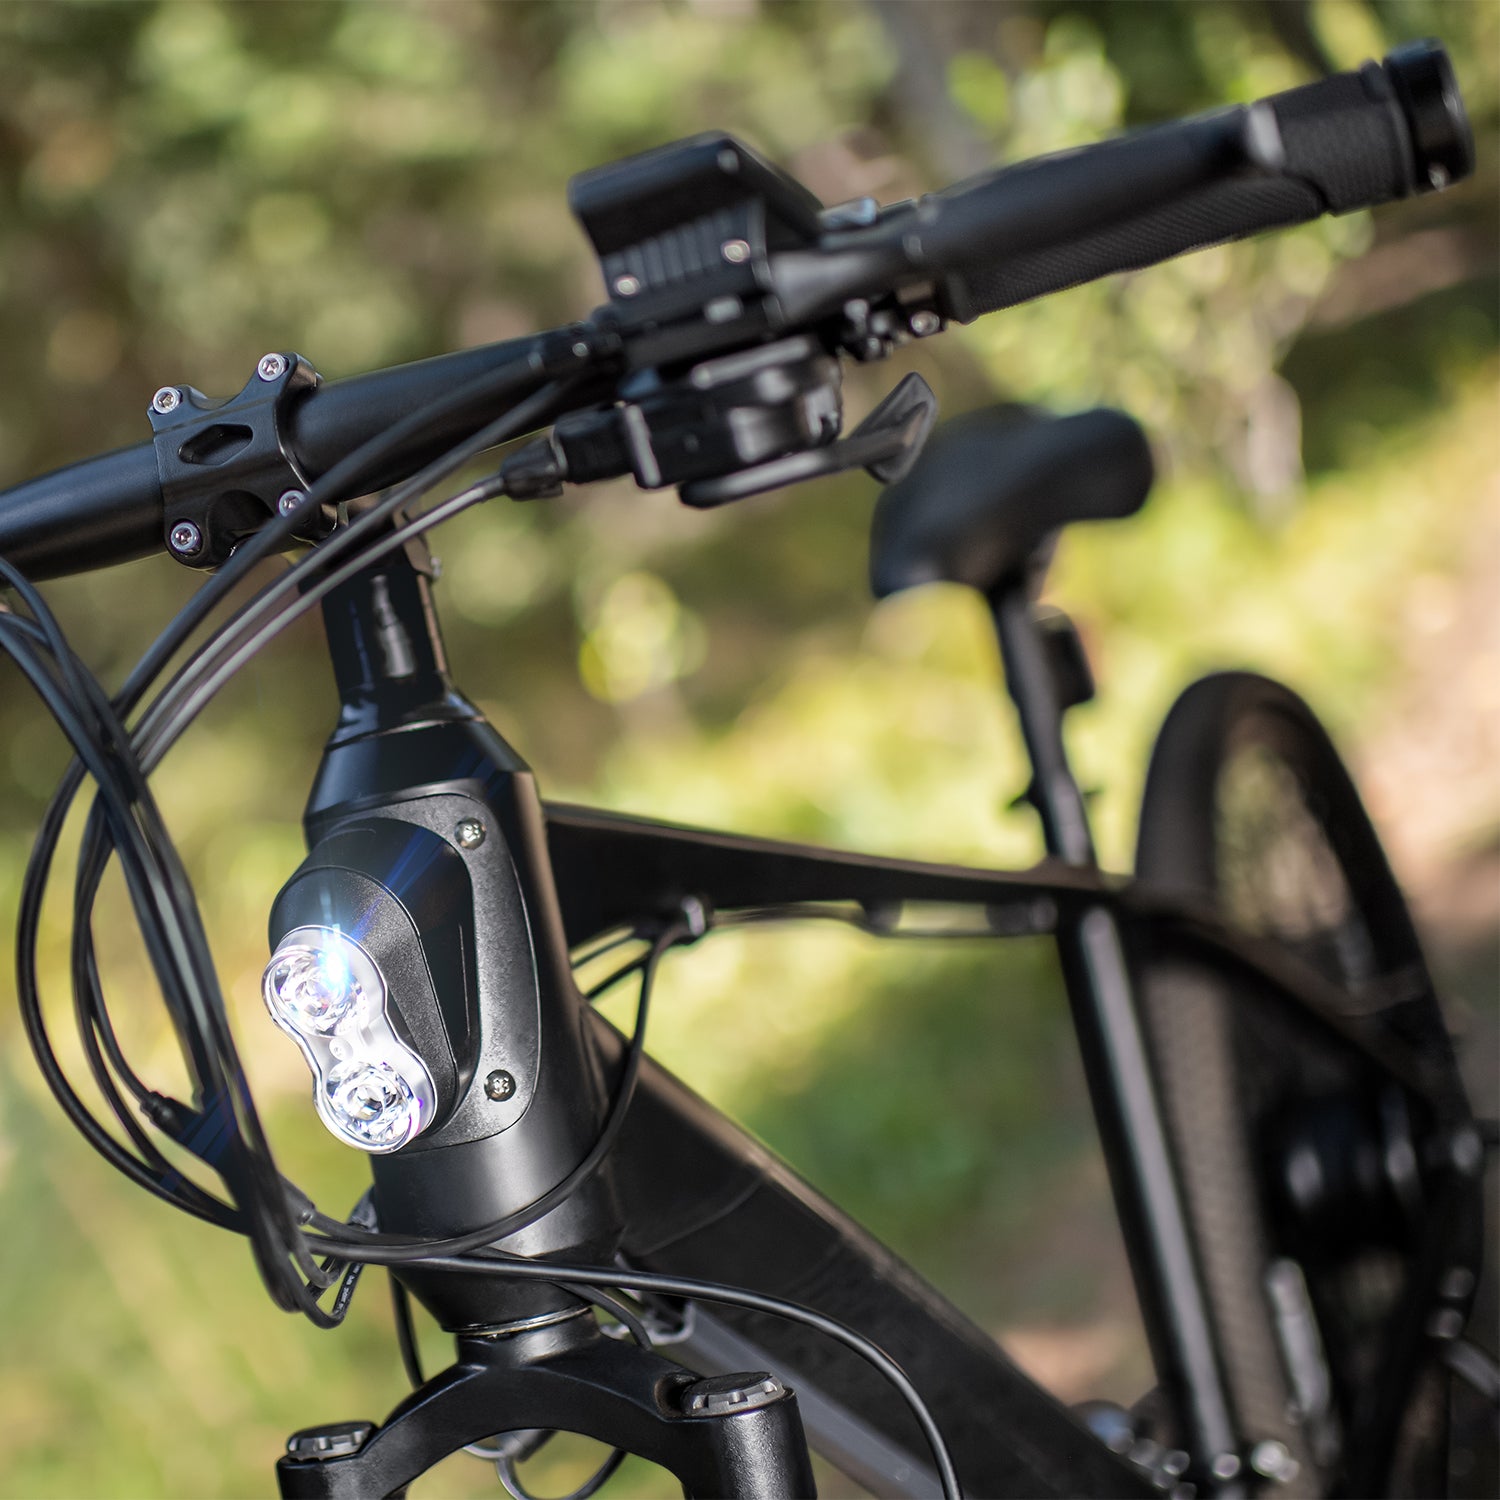 close up of the headlight on the black adventure bike